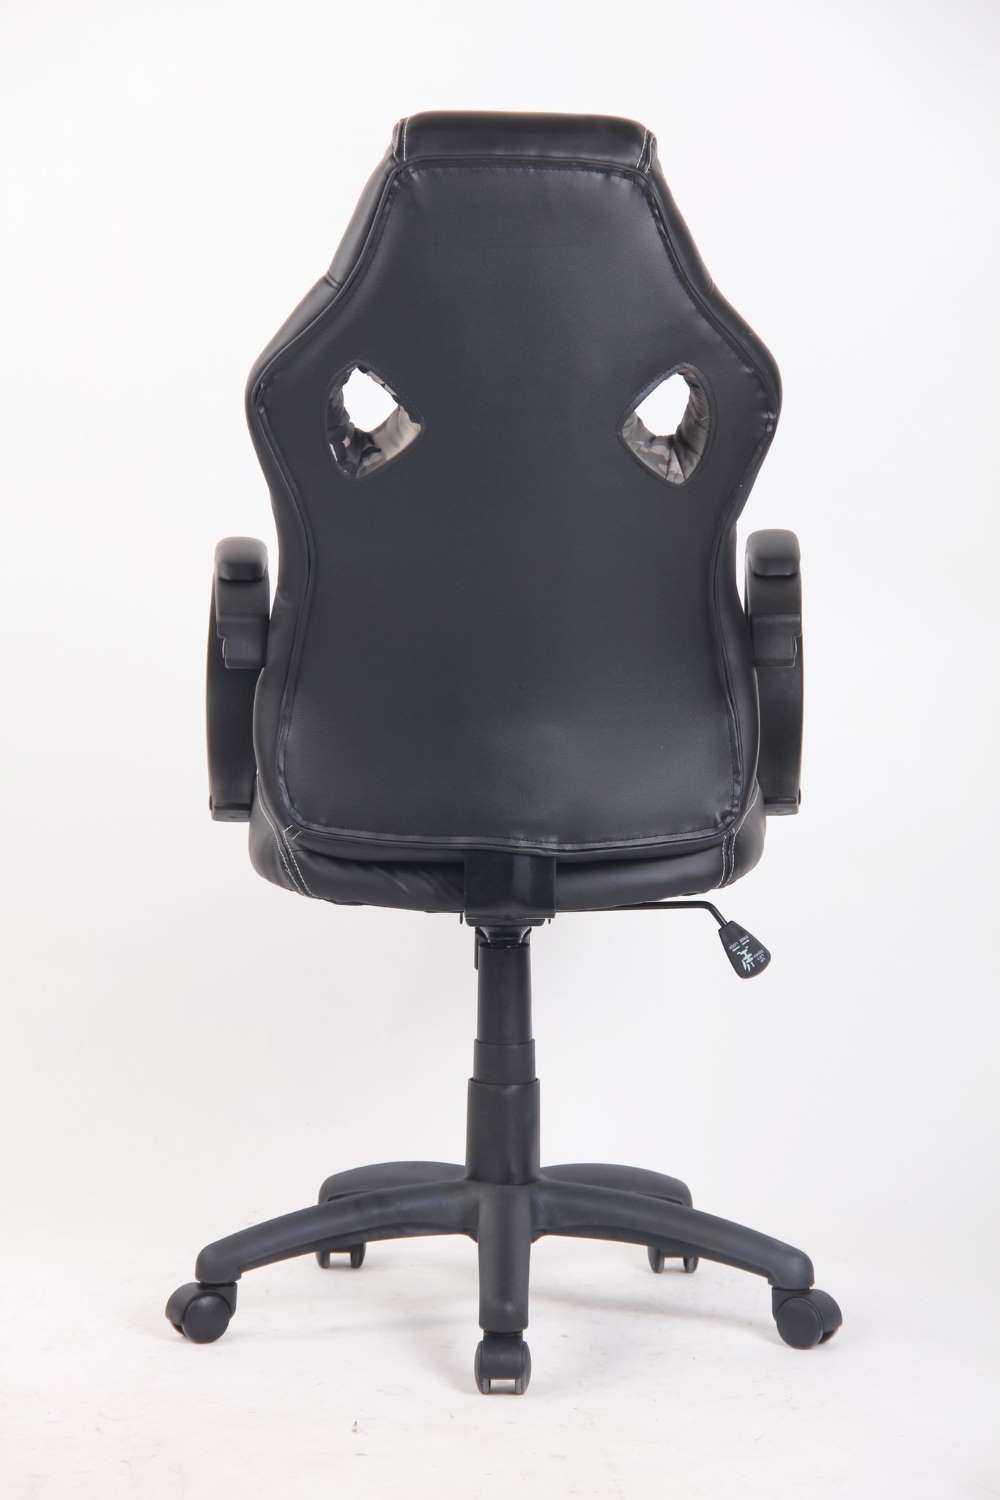 Chapman Gaming Chair - Camo and Black